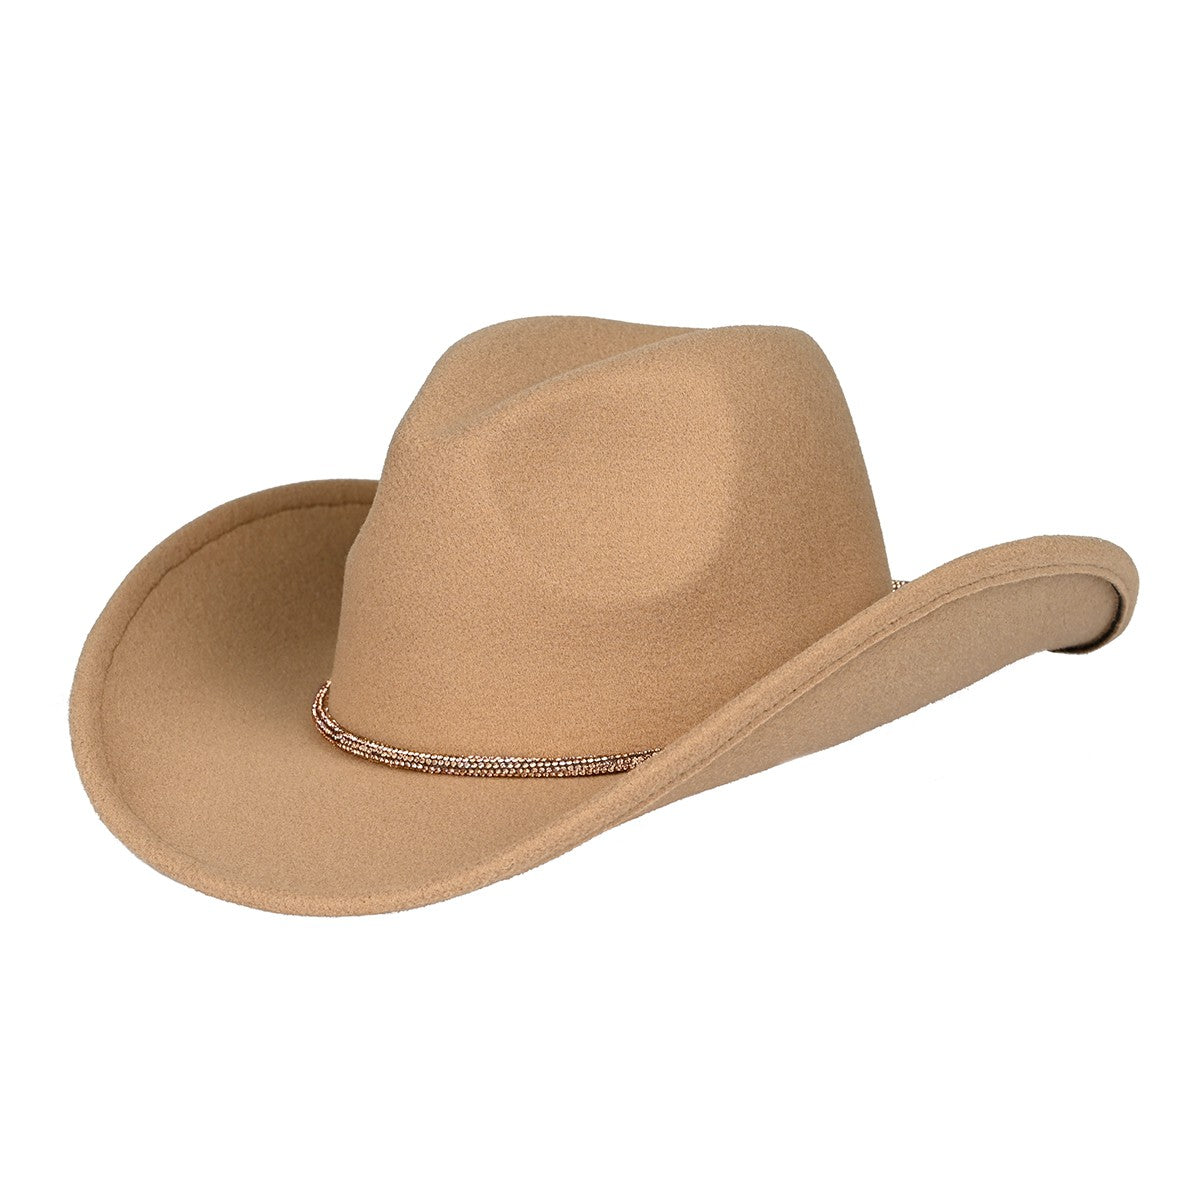 C.C. Vegan Rhinestone Cowboy Hat